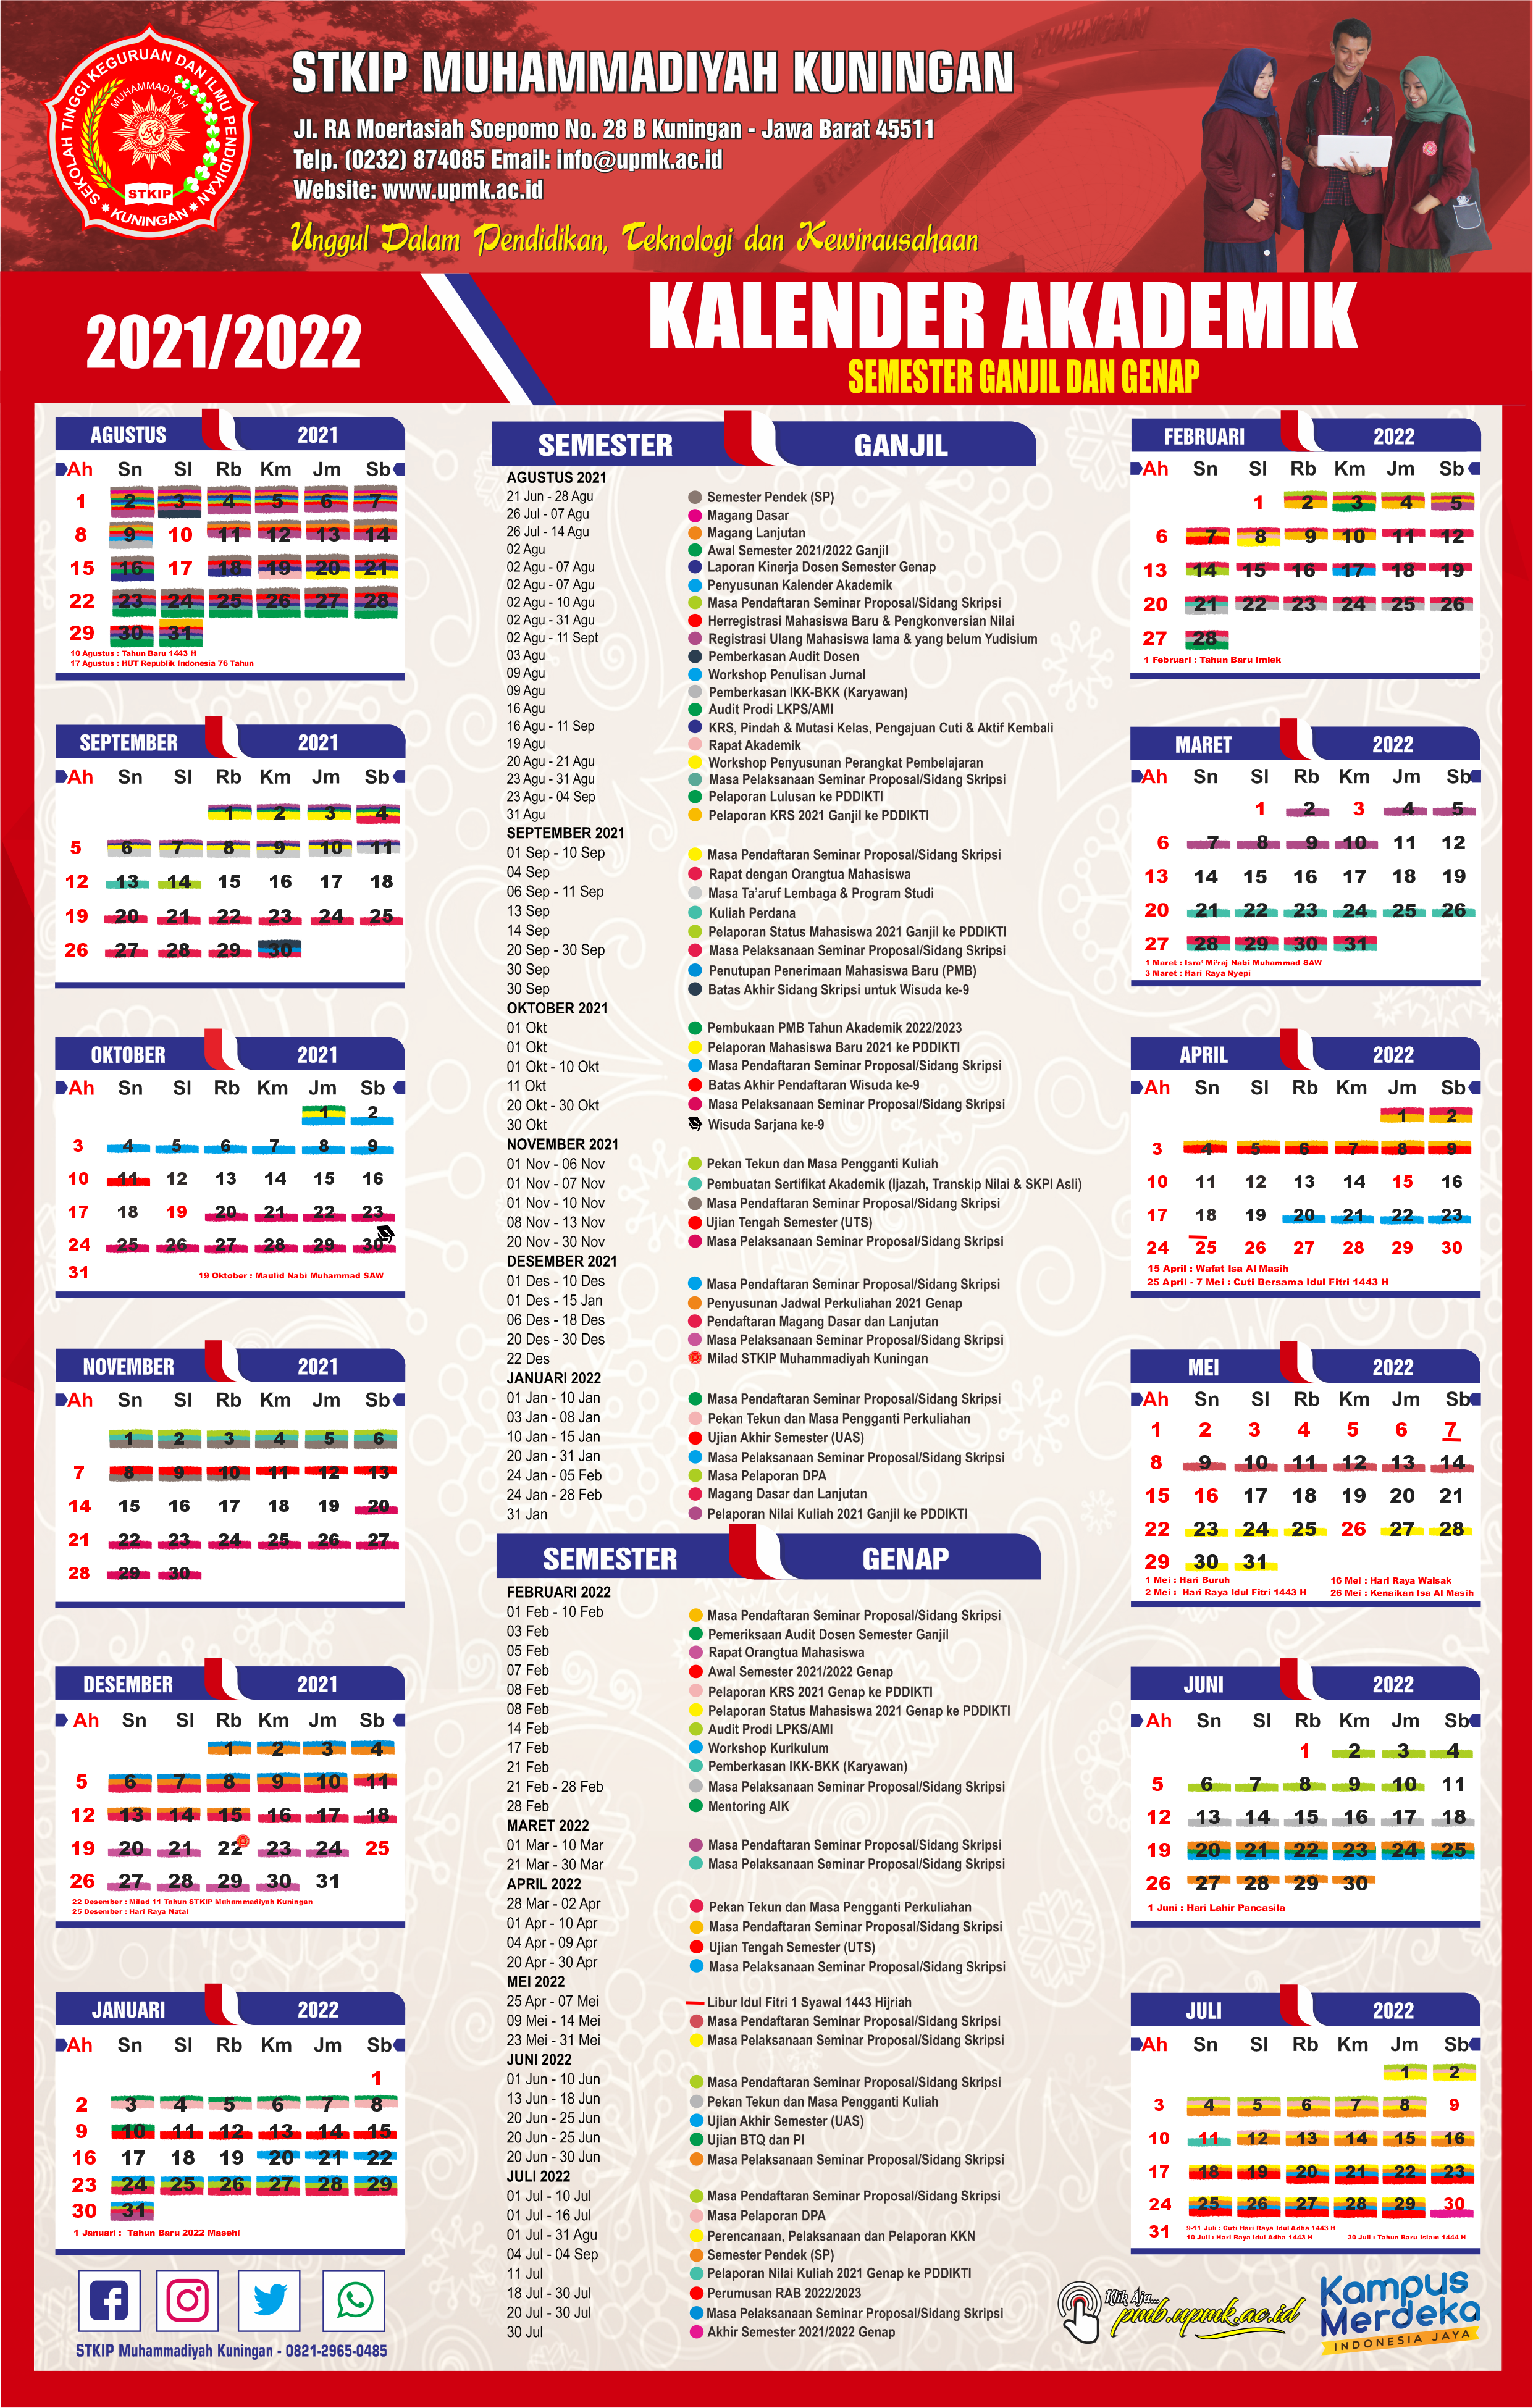 Kalender akademik 2022